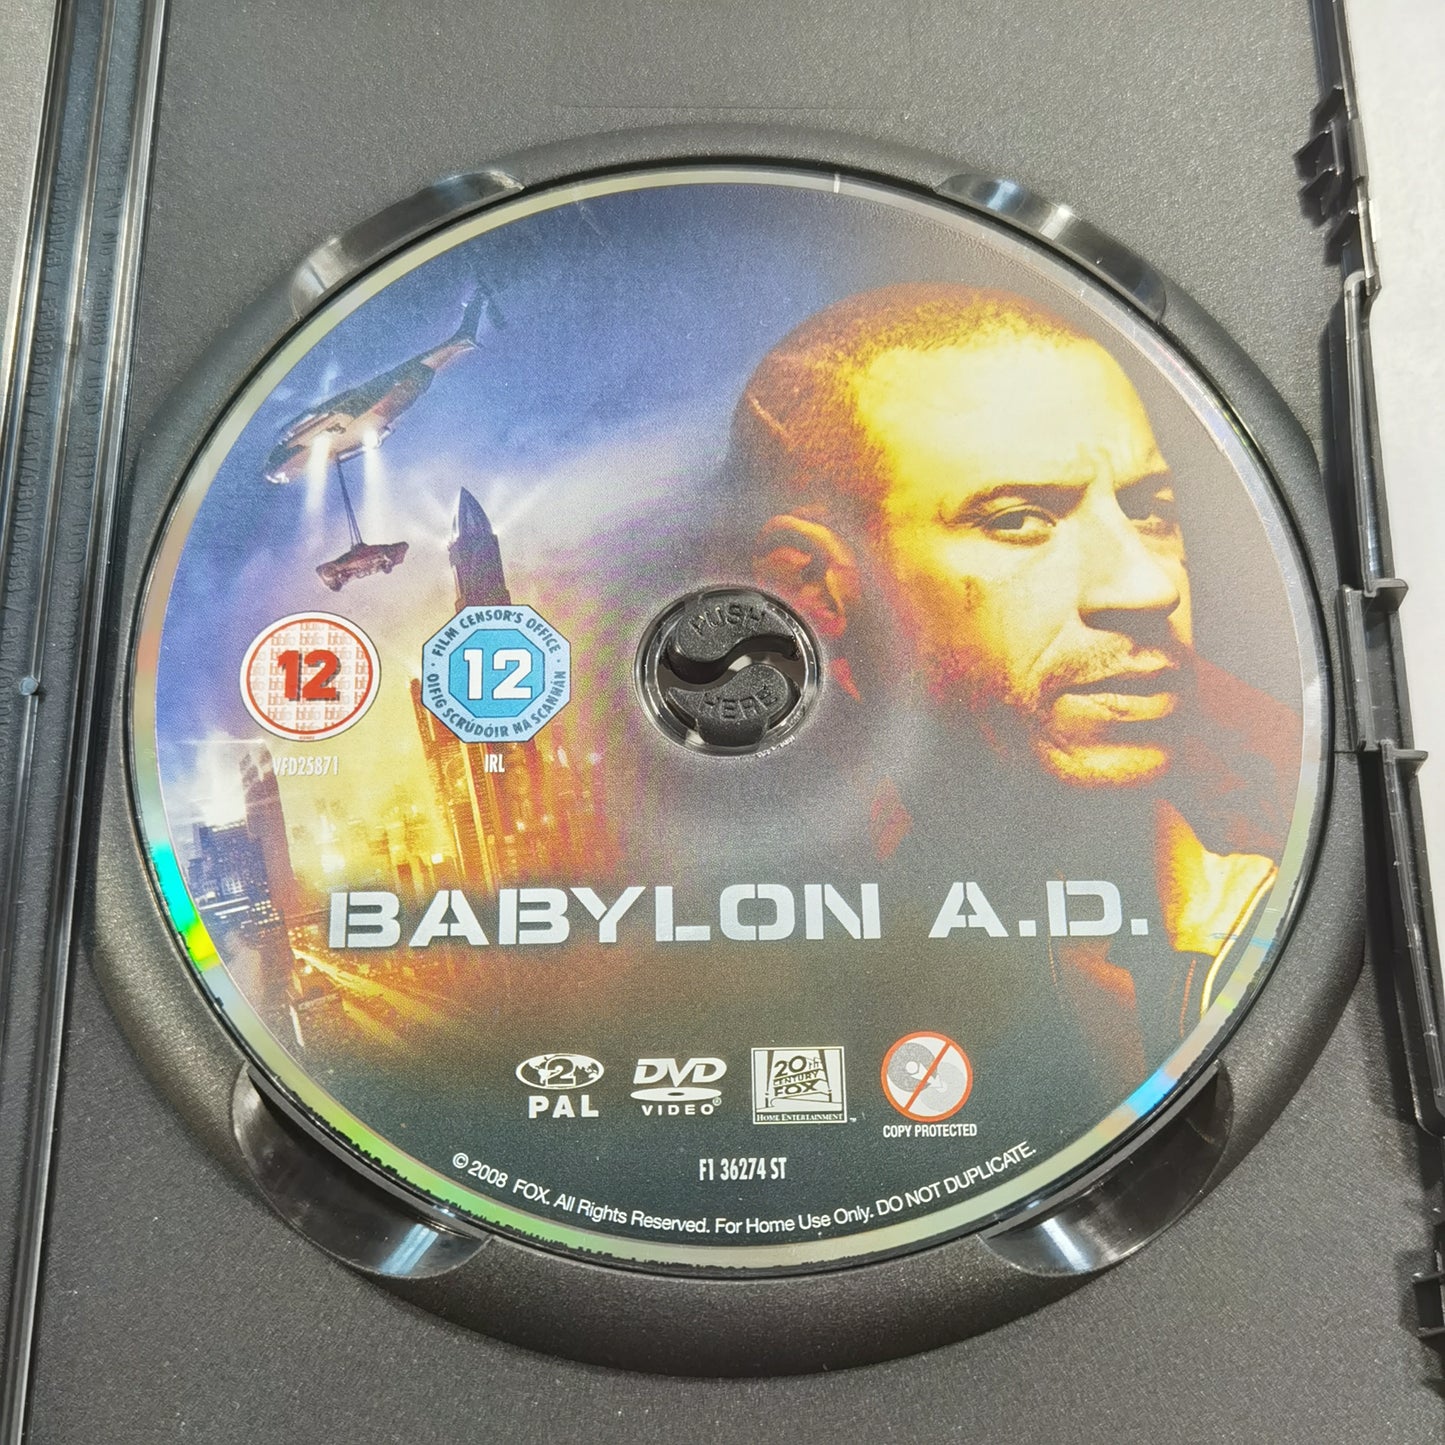 Babylon A.D. (2008) - DVD UK 2008